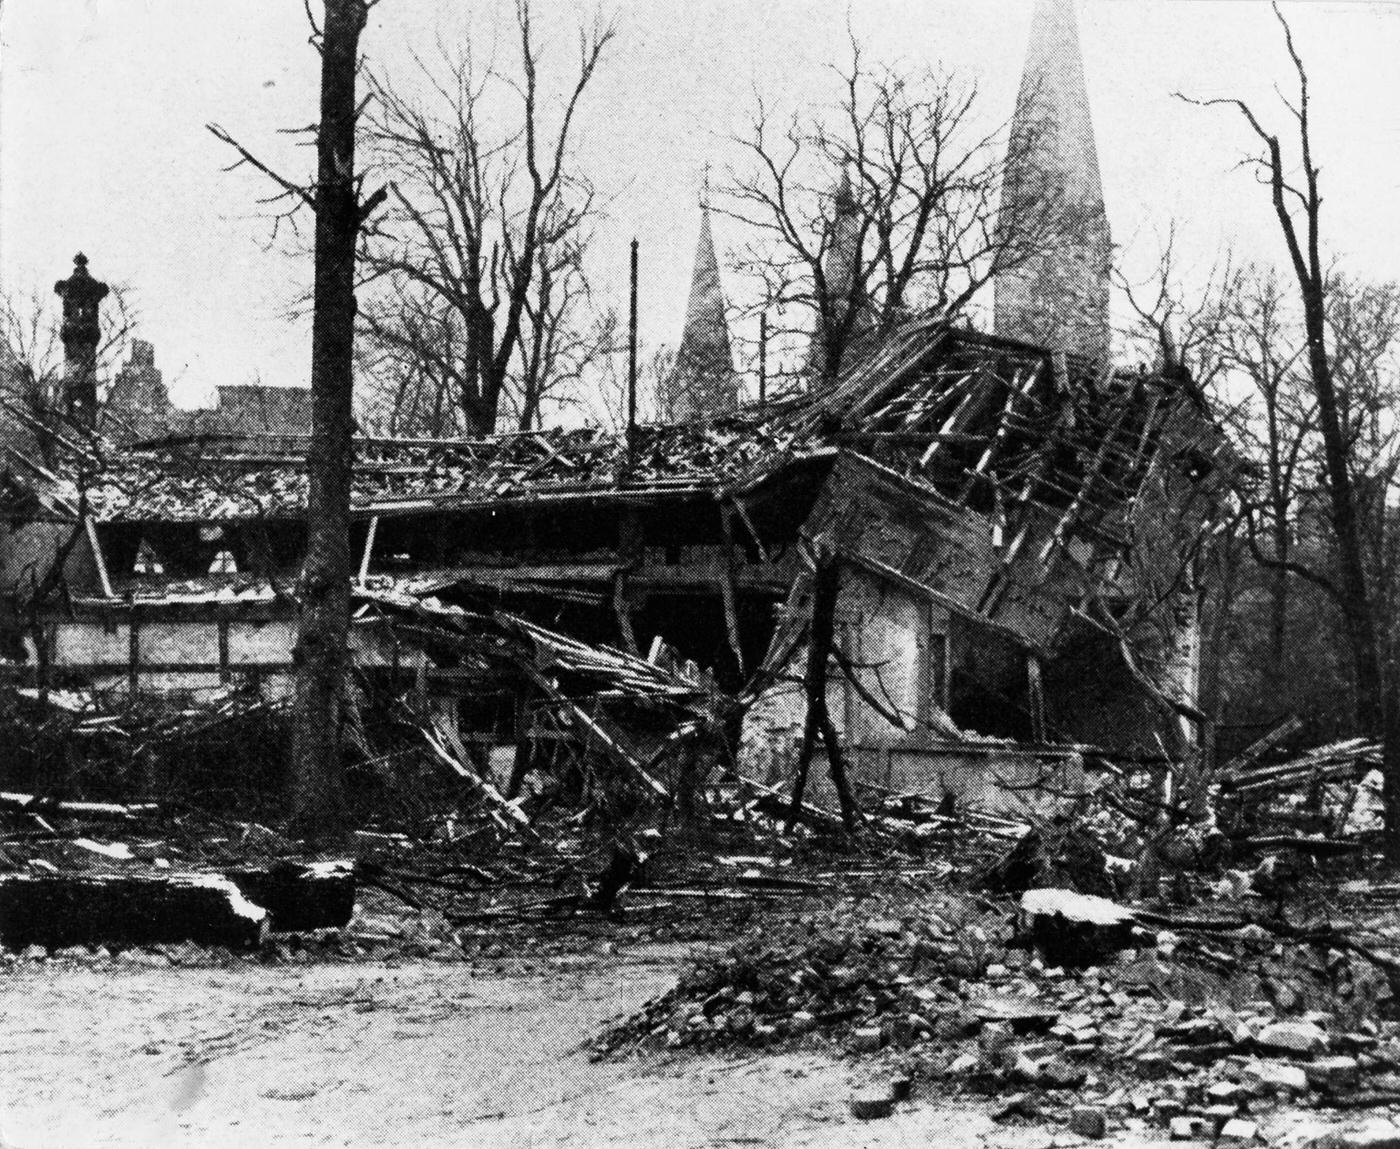 Berlin Zoological Gardens destroyed during World War II.